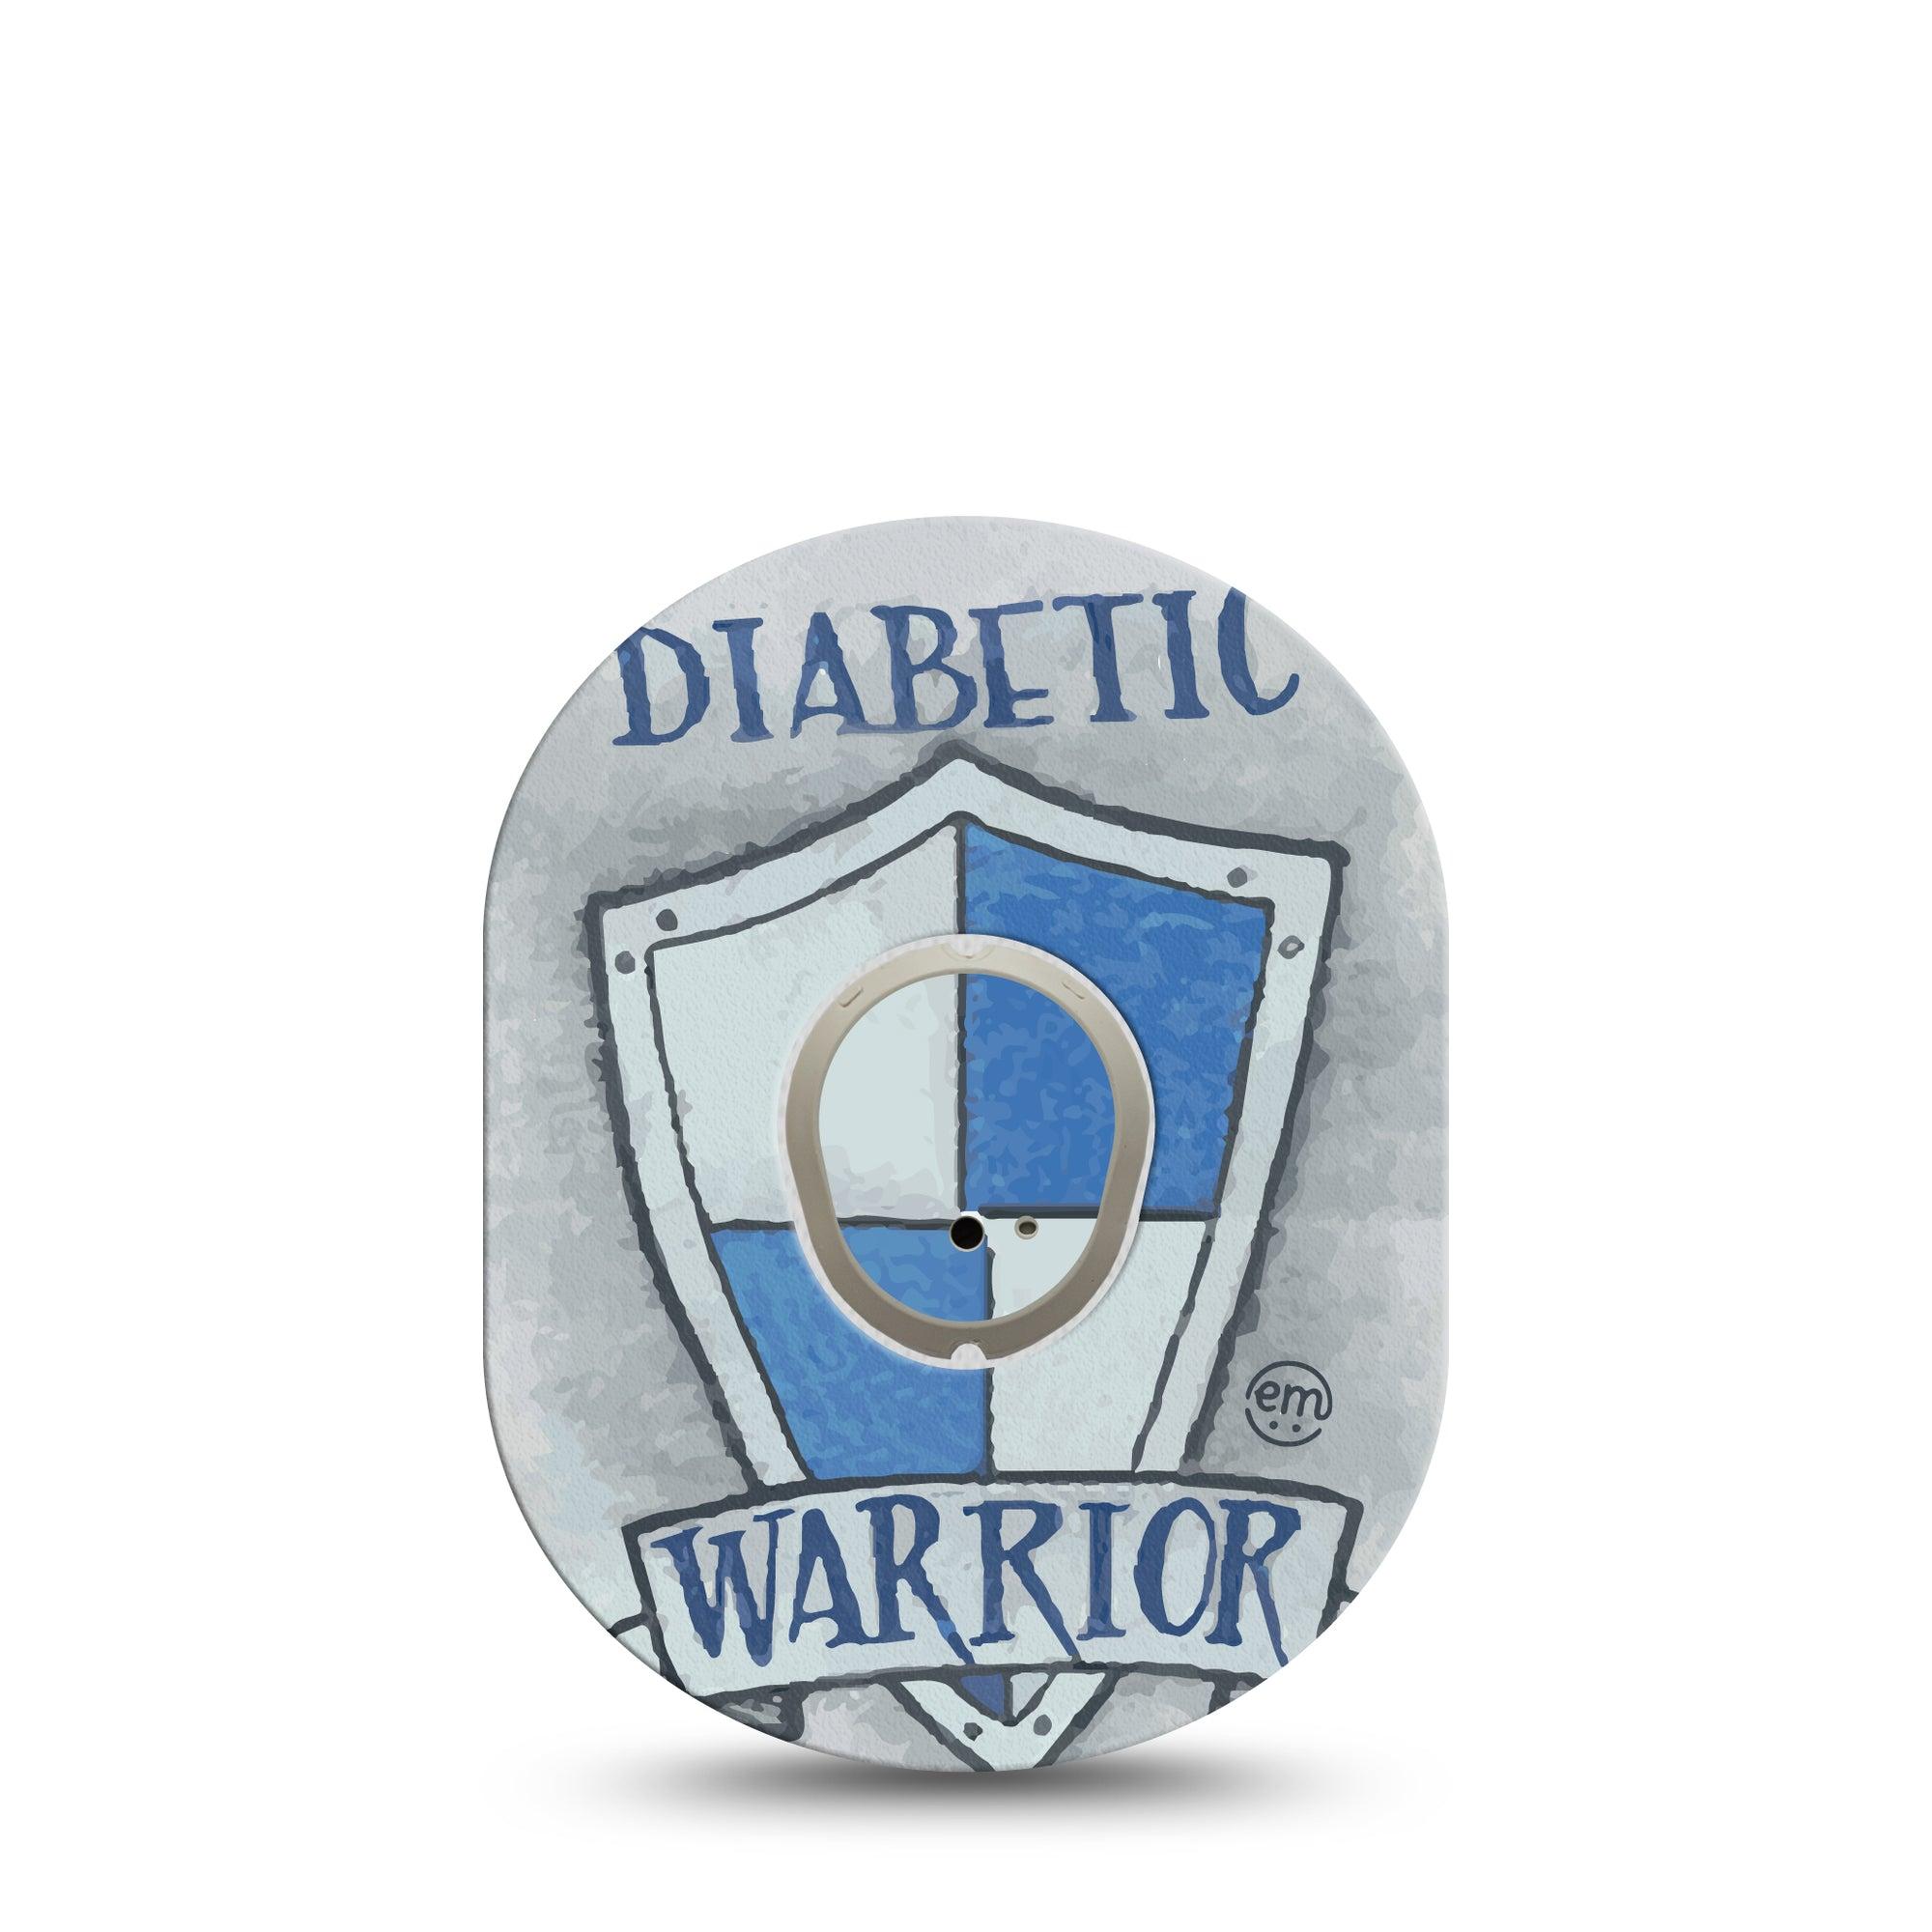 ExpressionMed Diabetic Warrior Dexcom G7 Transmitter Sticker, Single, Diabetic Shield Fighter Themed, Dexcom G7 Vinyl Transmitter Sticker, With Matching Dexcom G7 Tape, CGM Overlay Patch Design